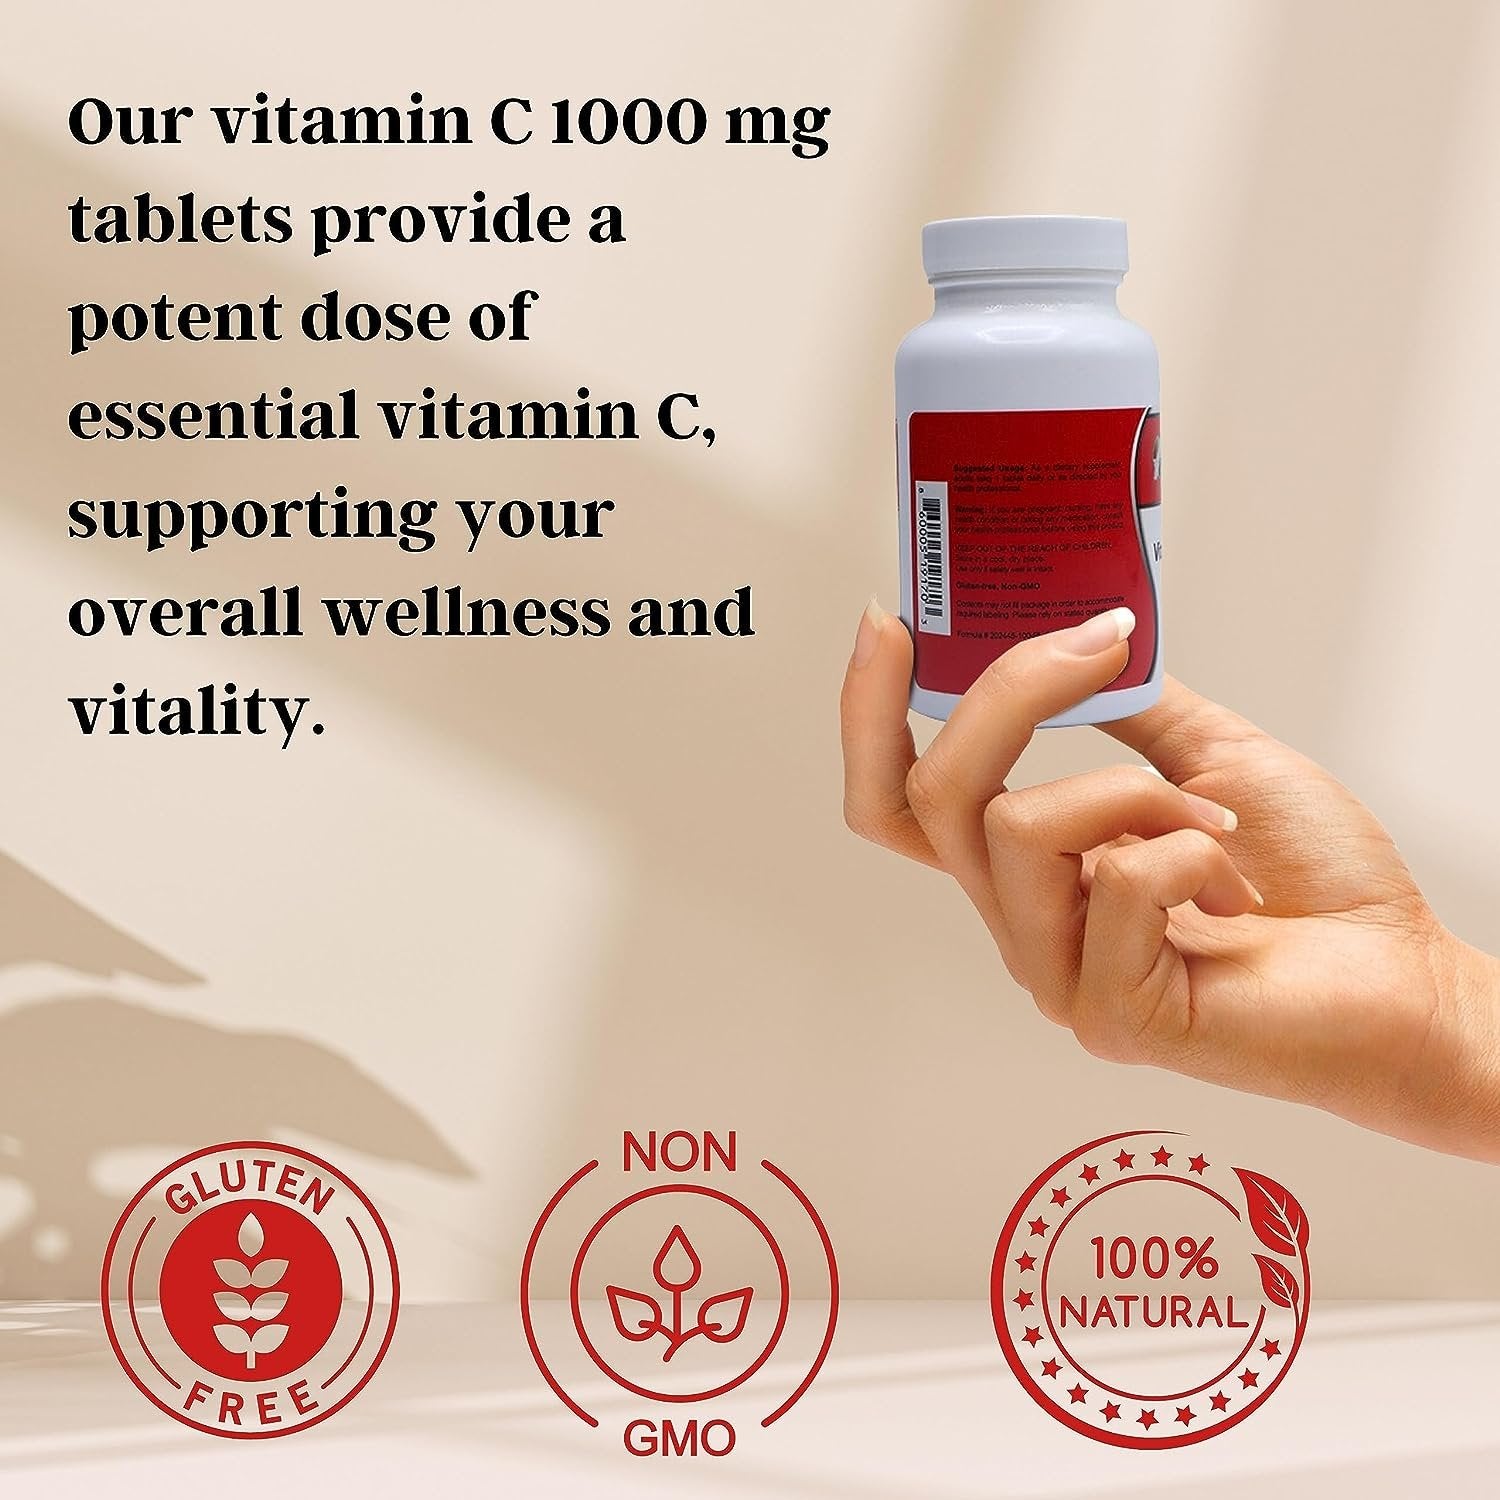 Dr. Sandi's Vitamin C 1000mg - High-Potency Ascorbic Acid Tablets for Superior Antioxidant Support - Ascorbic Acid Vitamin C for Overall Vitality - Vit C 1000mg, 100 Count Vitamin C Tablets